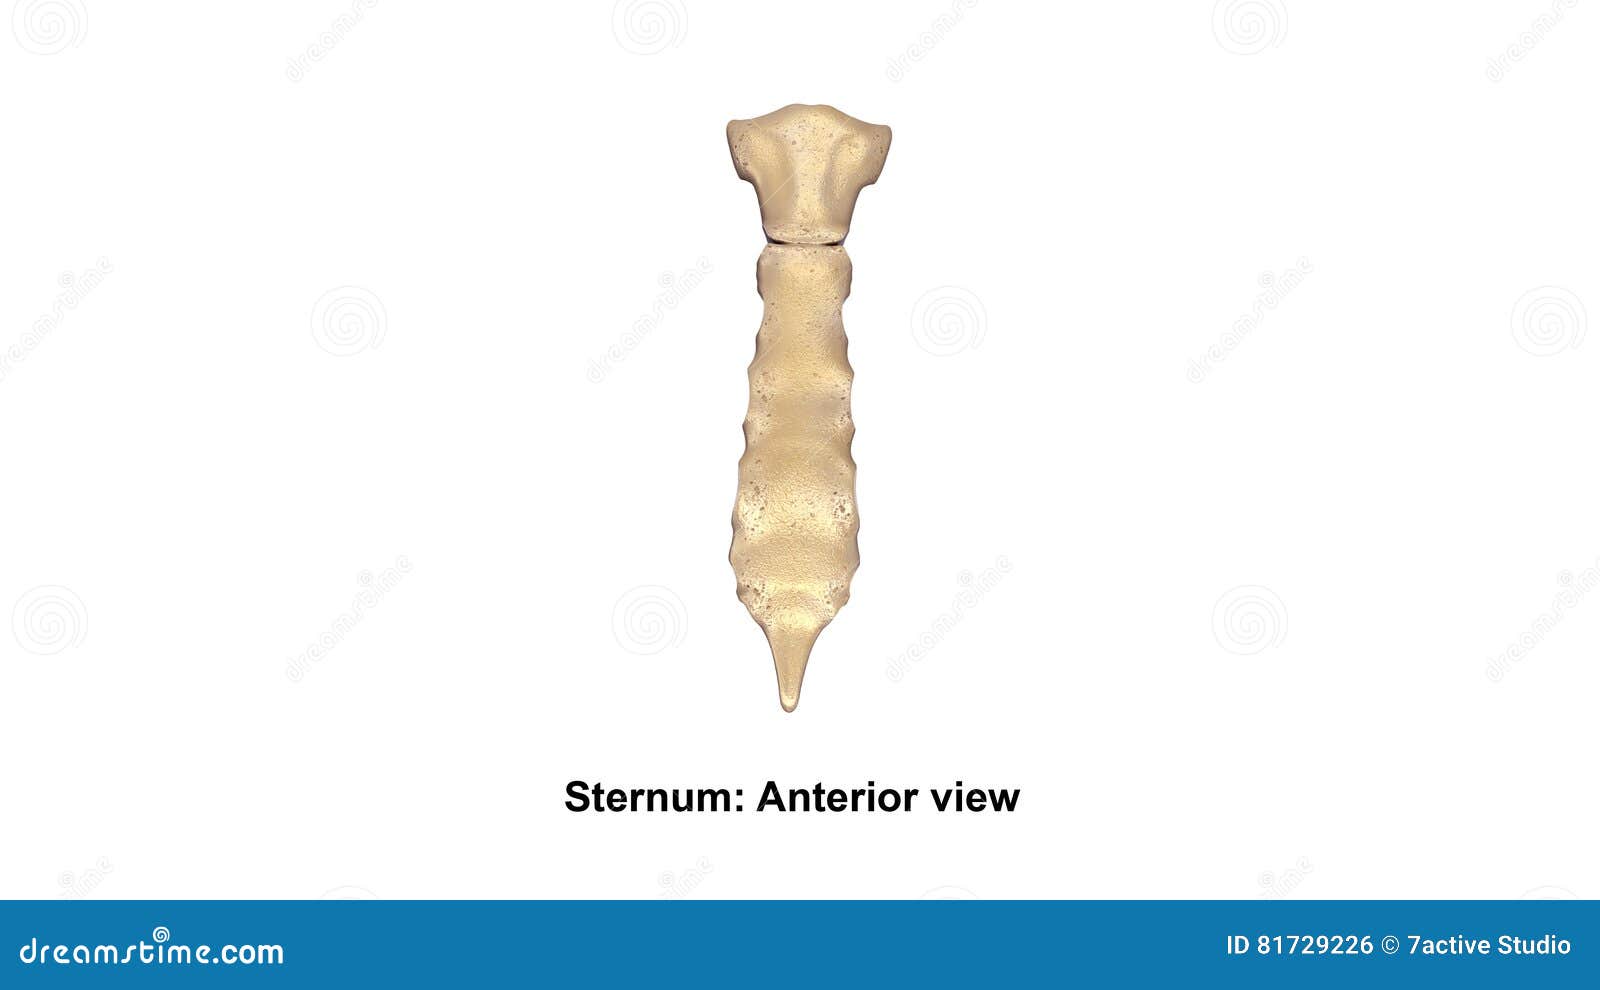 Sternum Anterior view stock illustration. Illustration of anterior